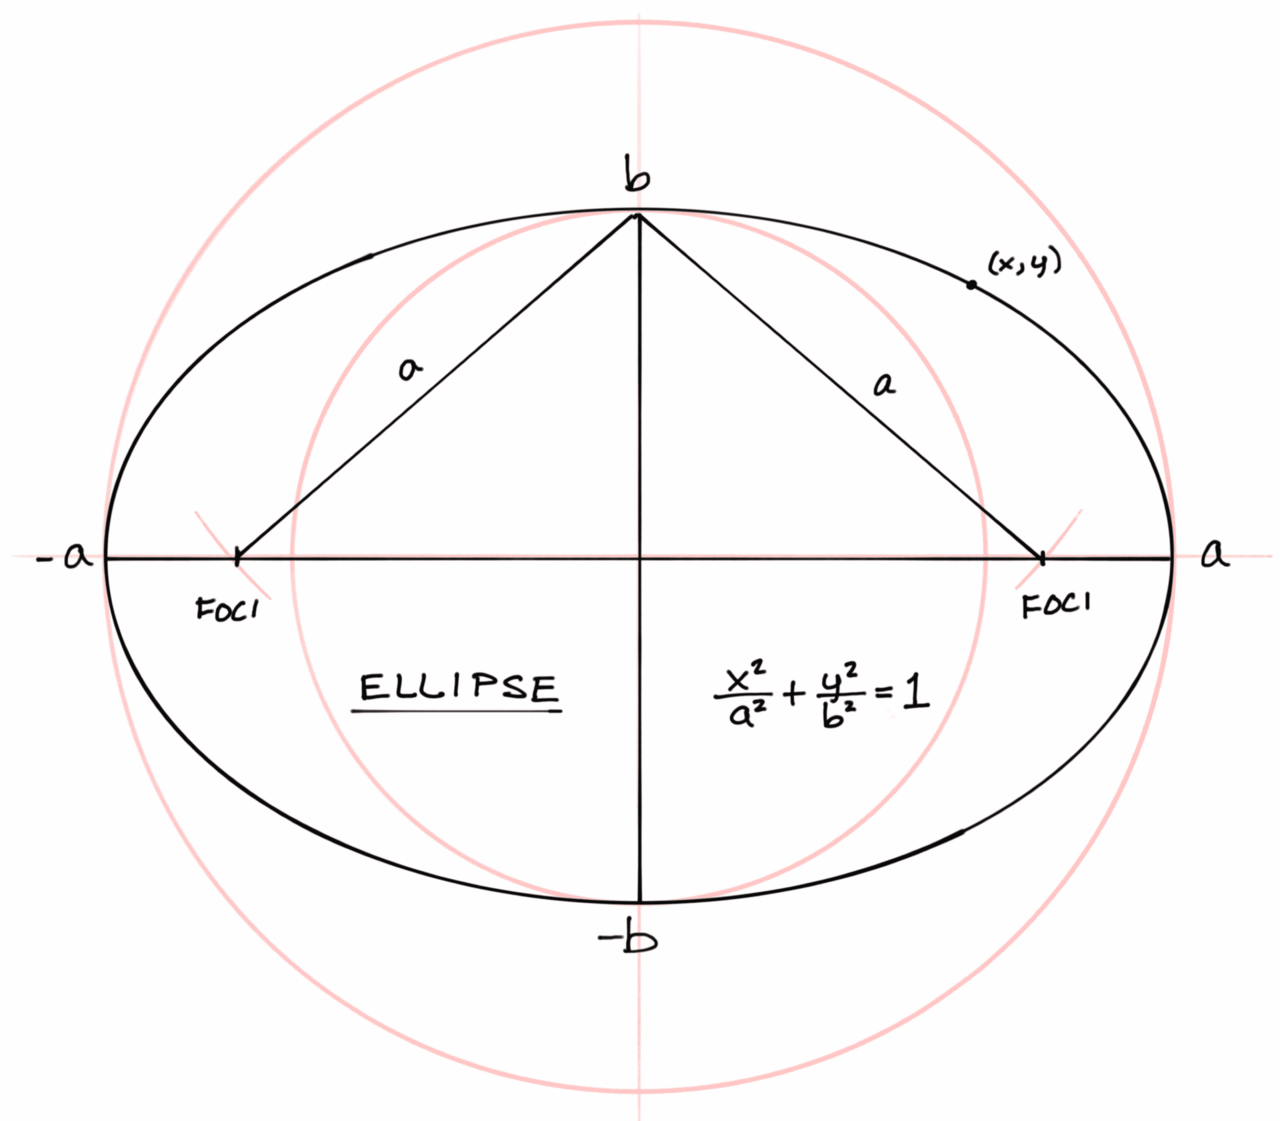 Sketch of ellipse concepts.